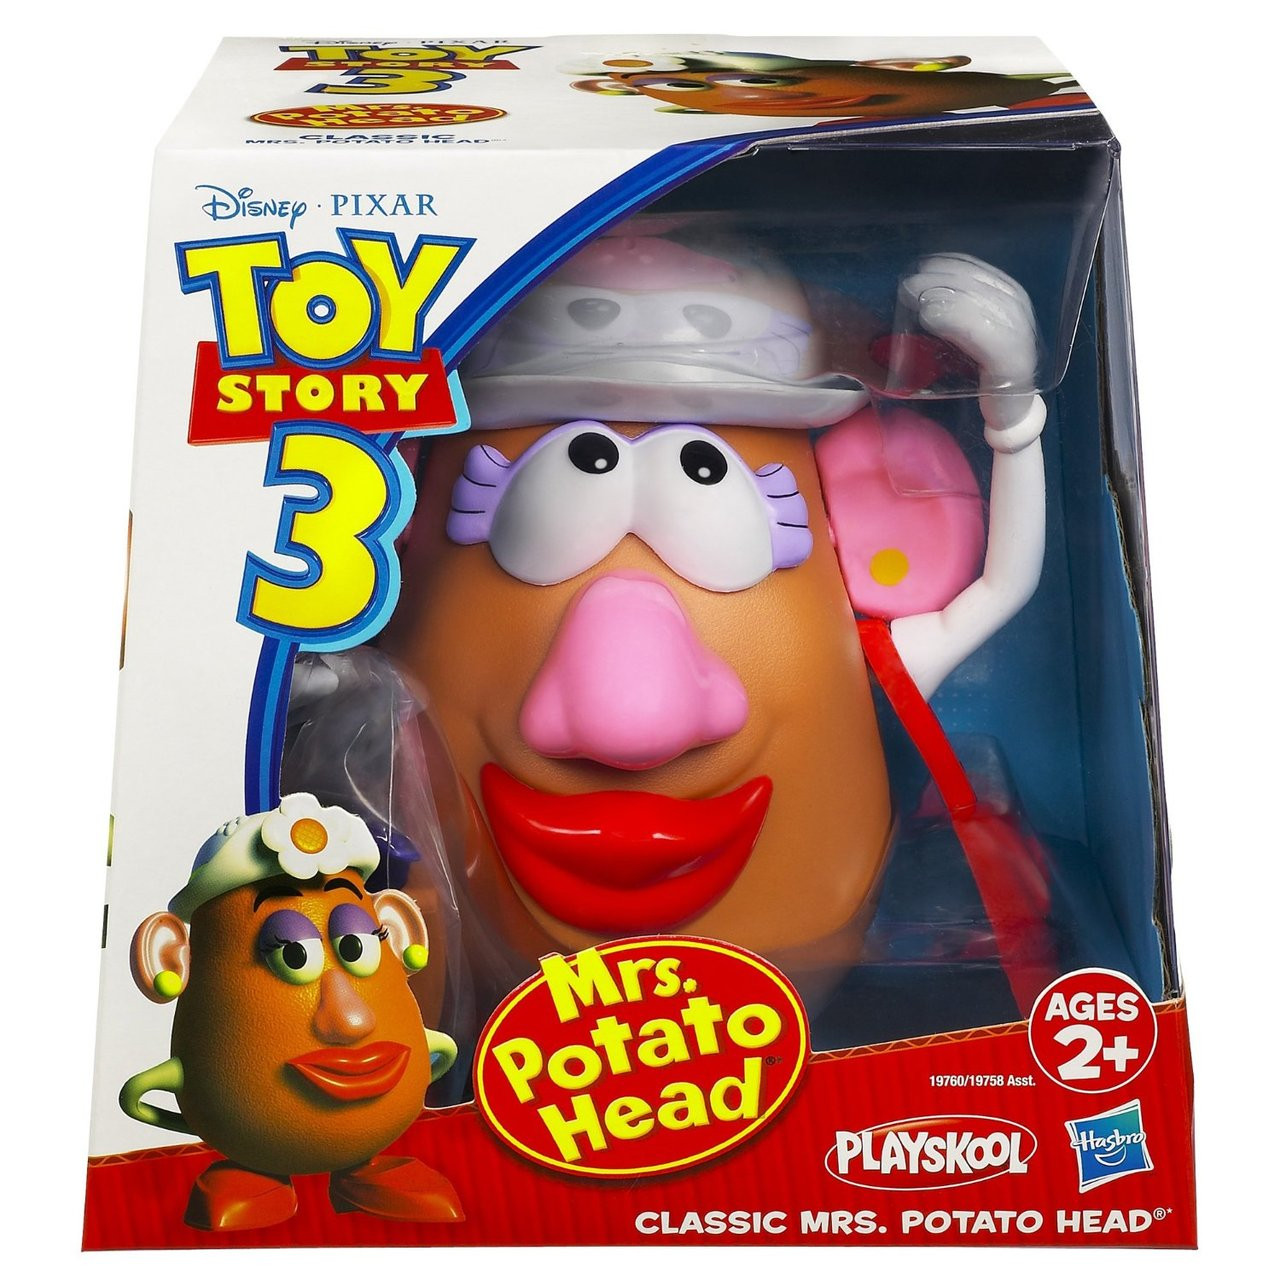 Playskool Toy Story 3 Classic Mrs Potato Head For Moms